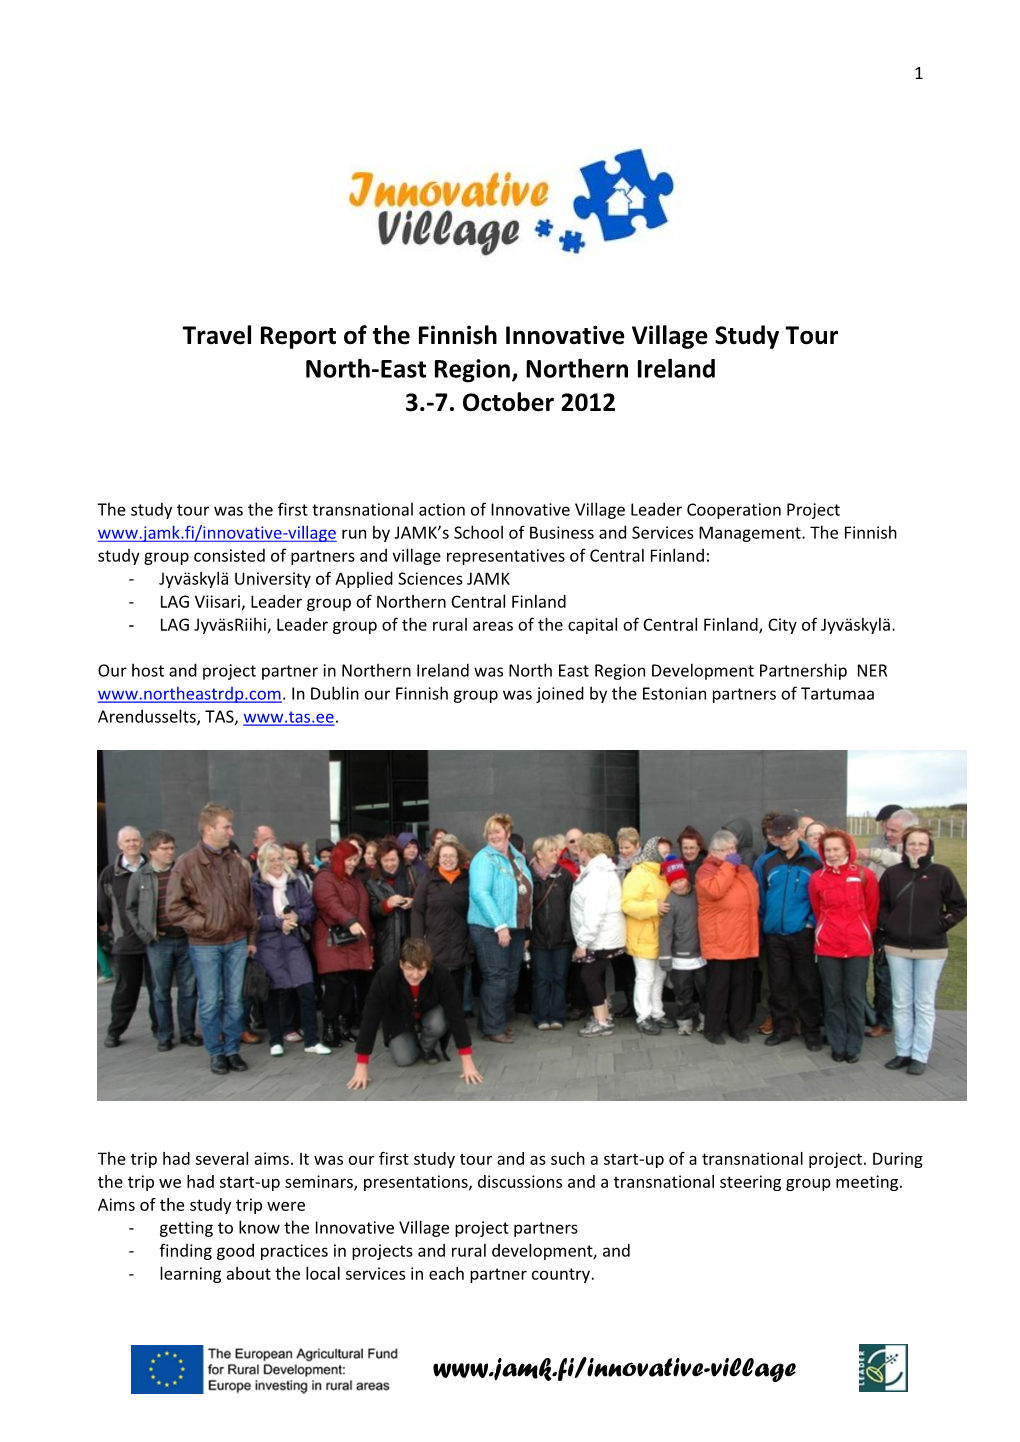 Travel Report of the Finnish Innovative Village Study Tour North-East Region, Northern Ireland 3